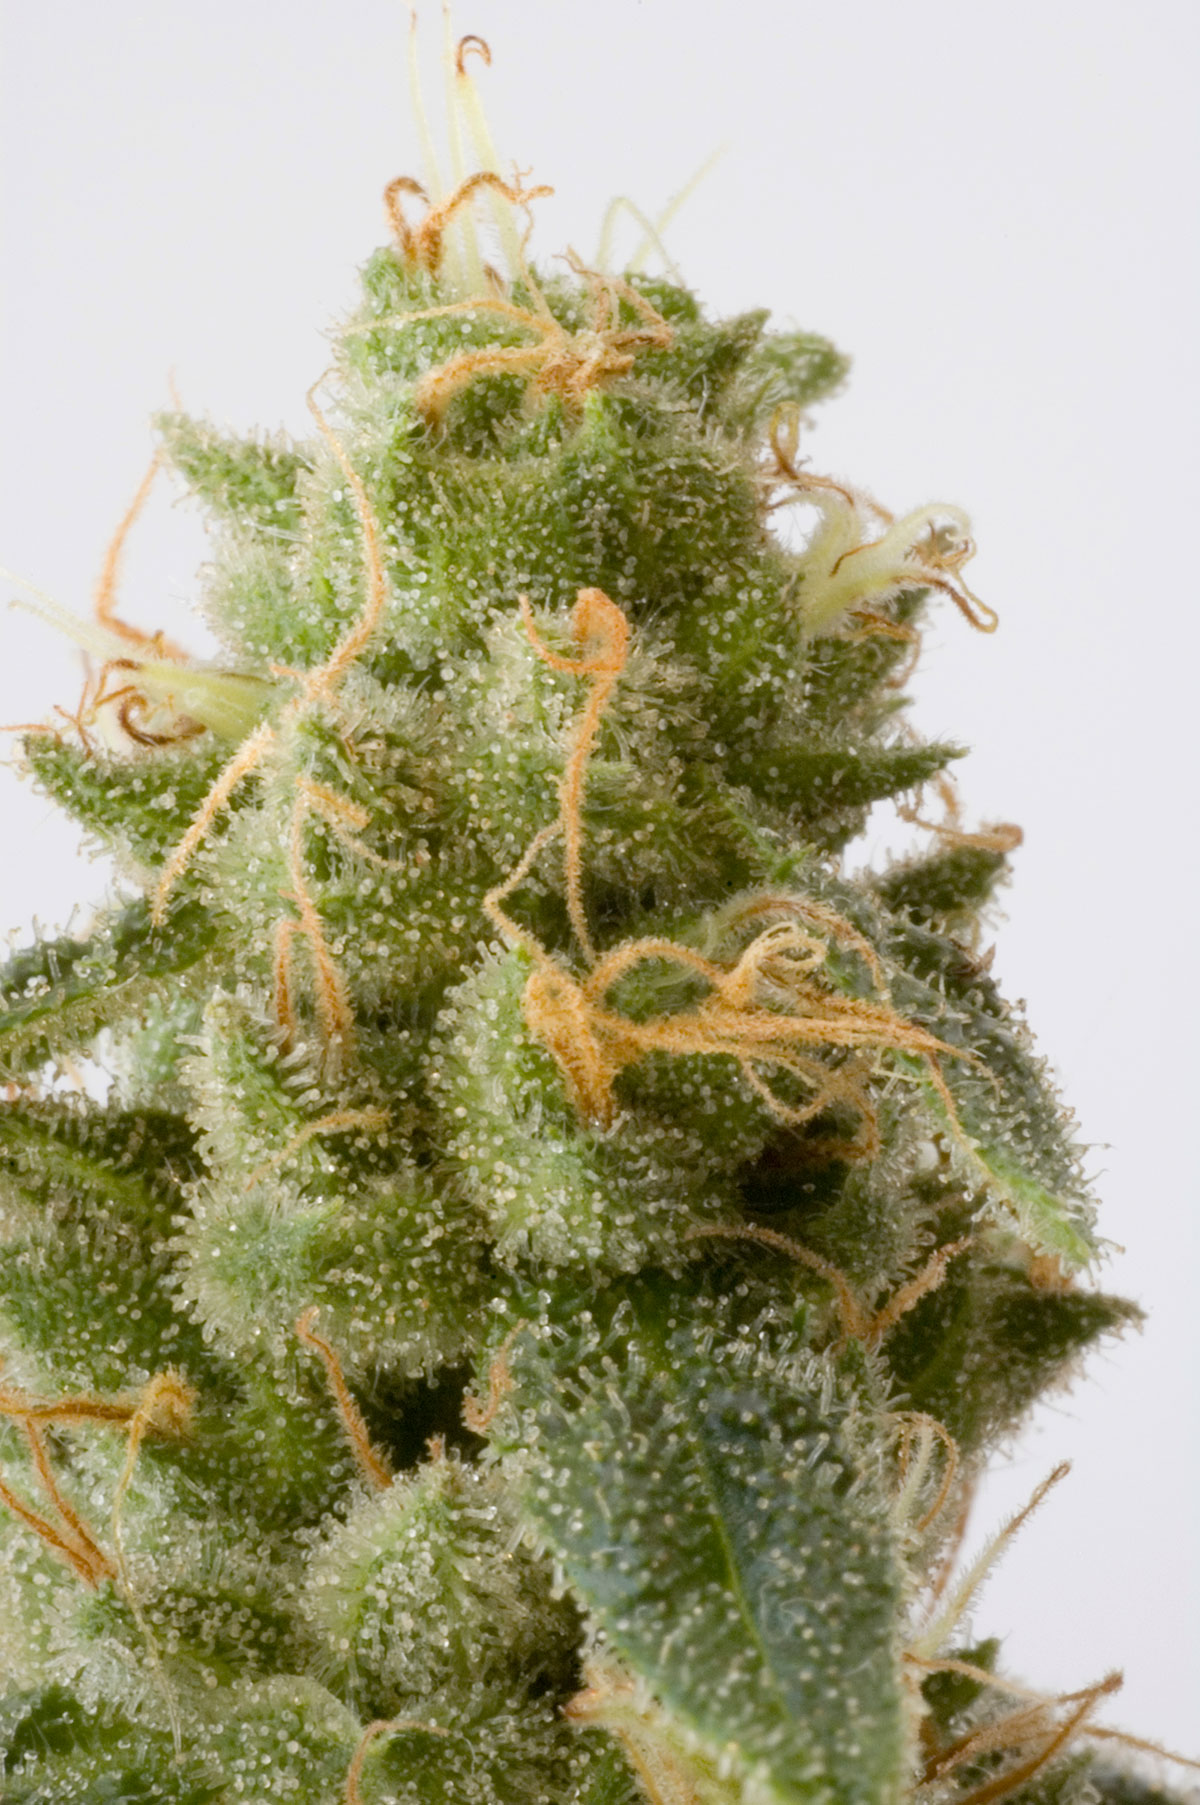 Buy Cannabis Seeds For Sale in Lynnwood